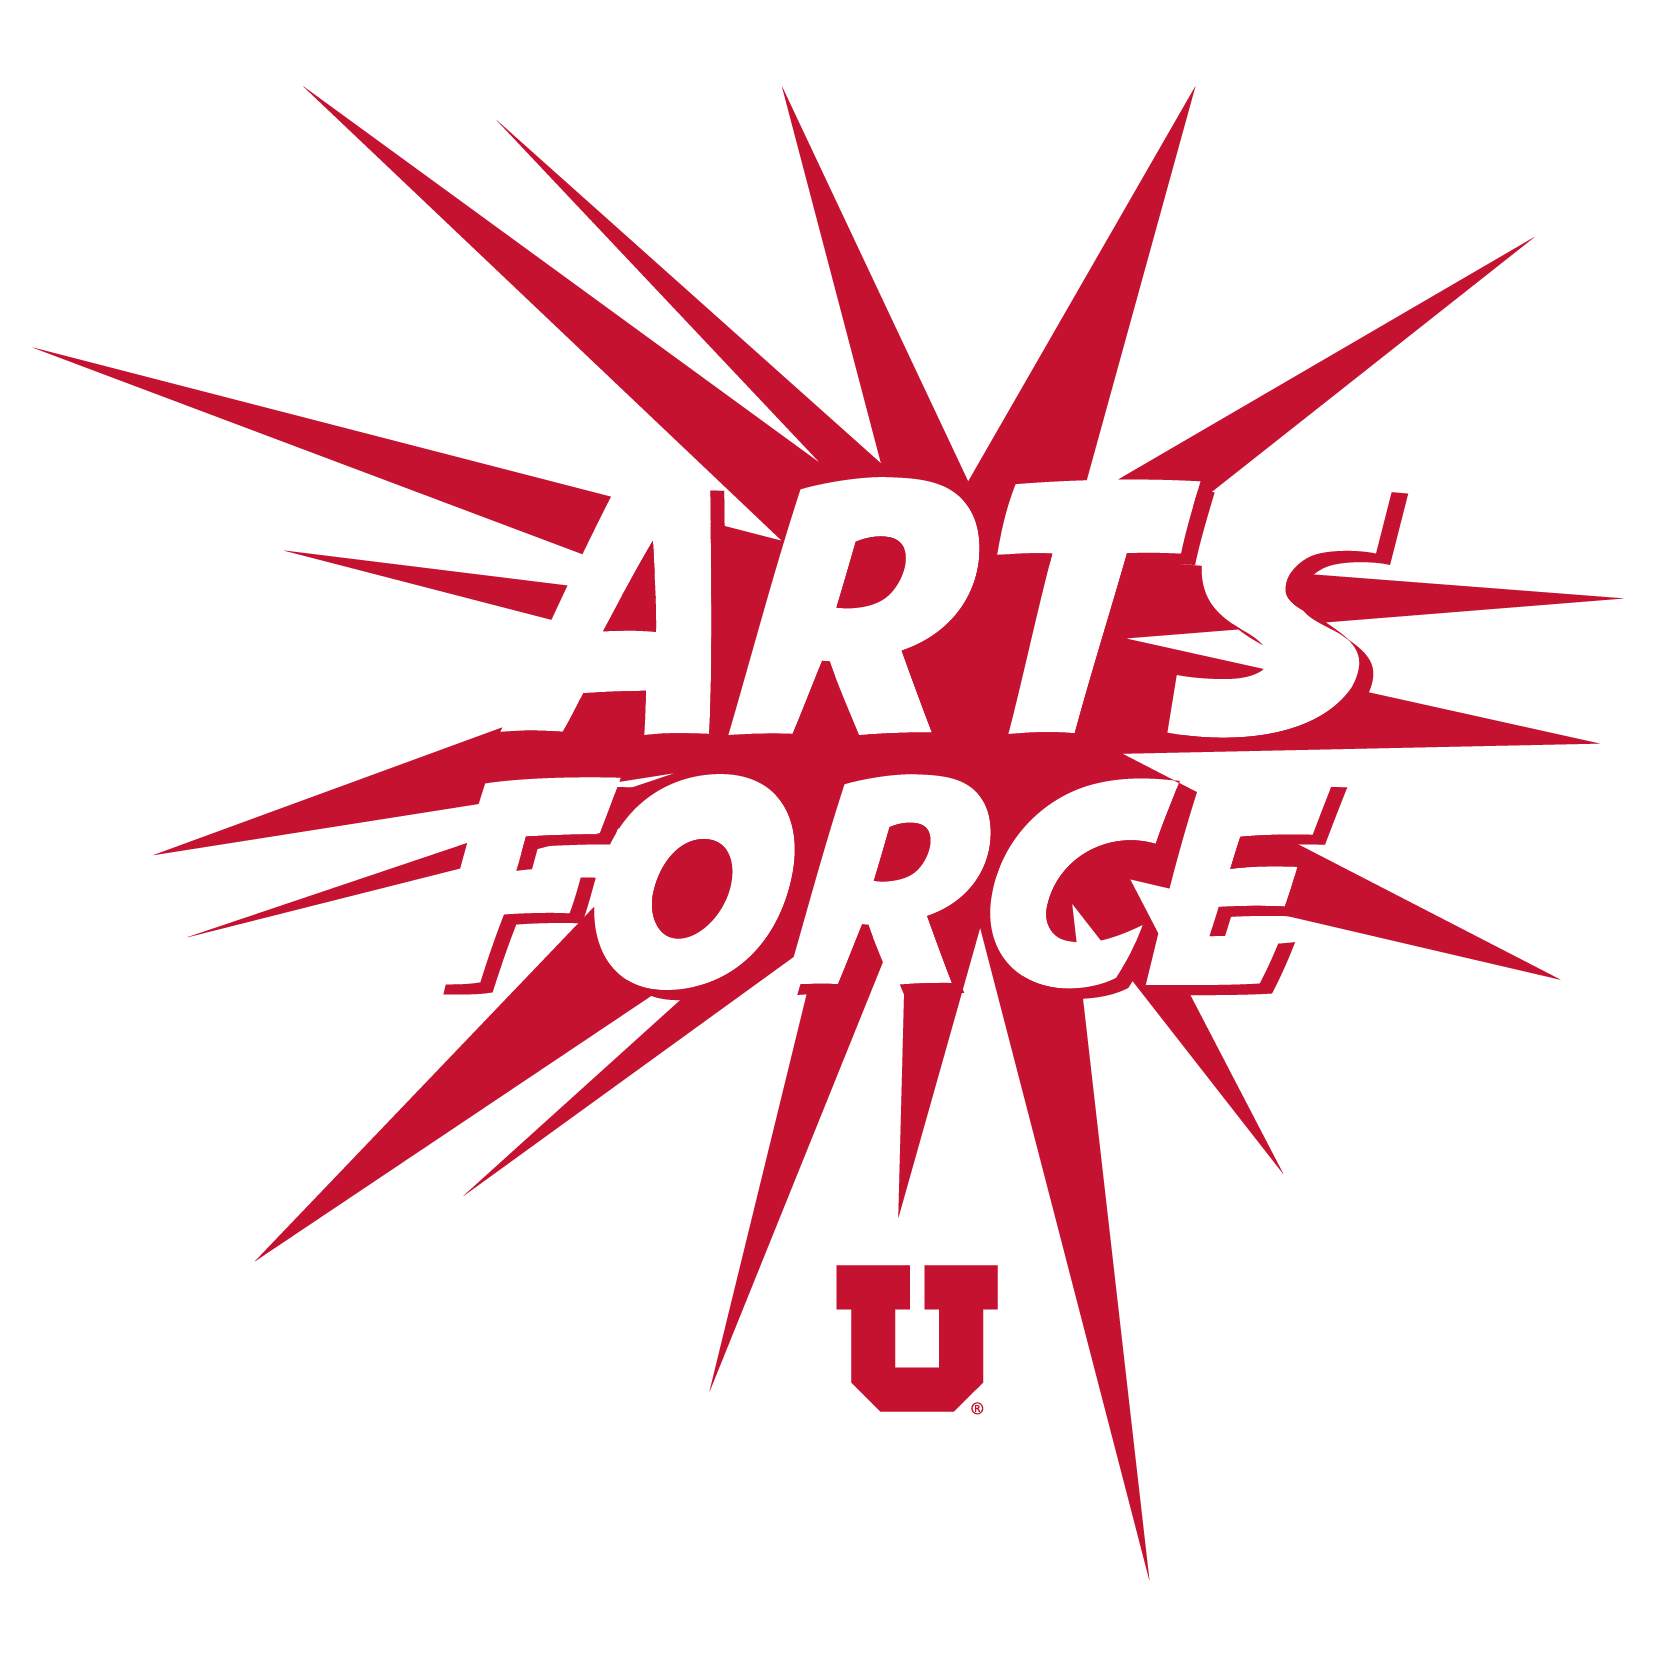 ArtsForce 2015 Red